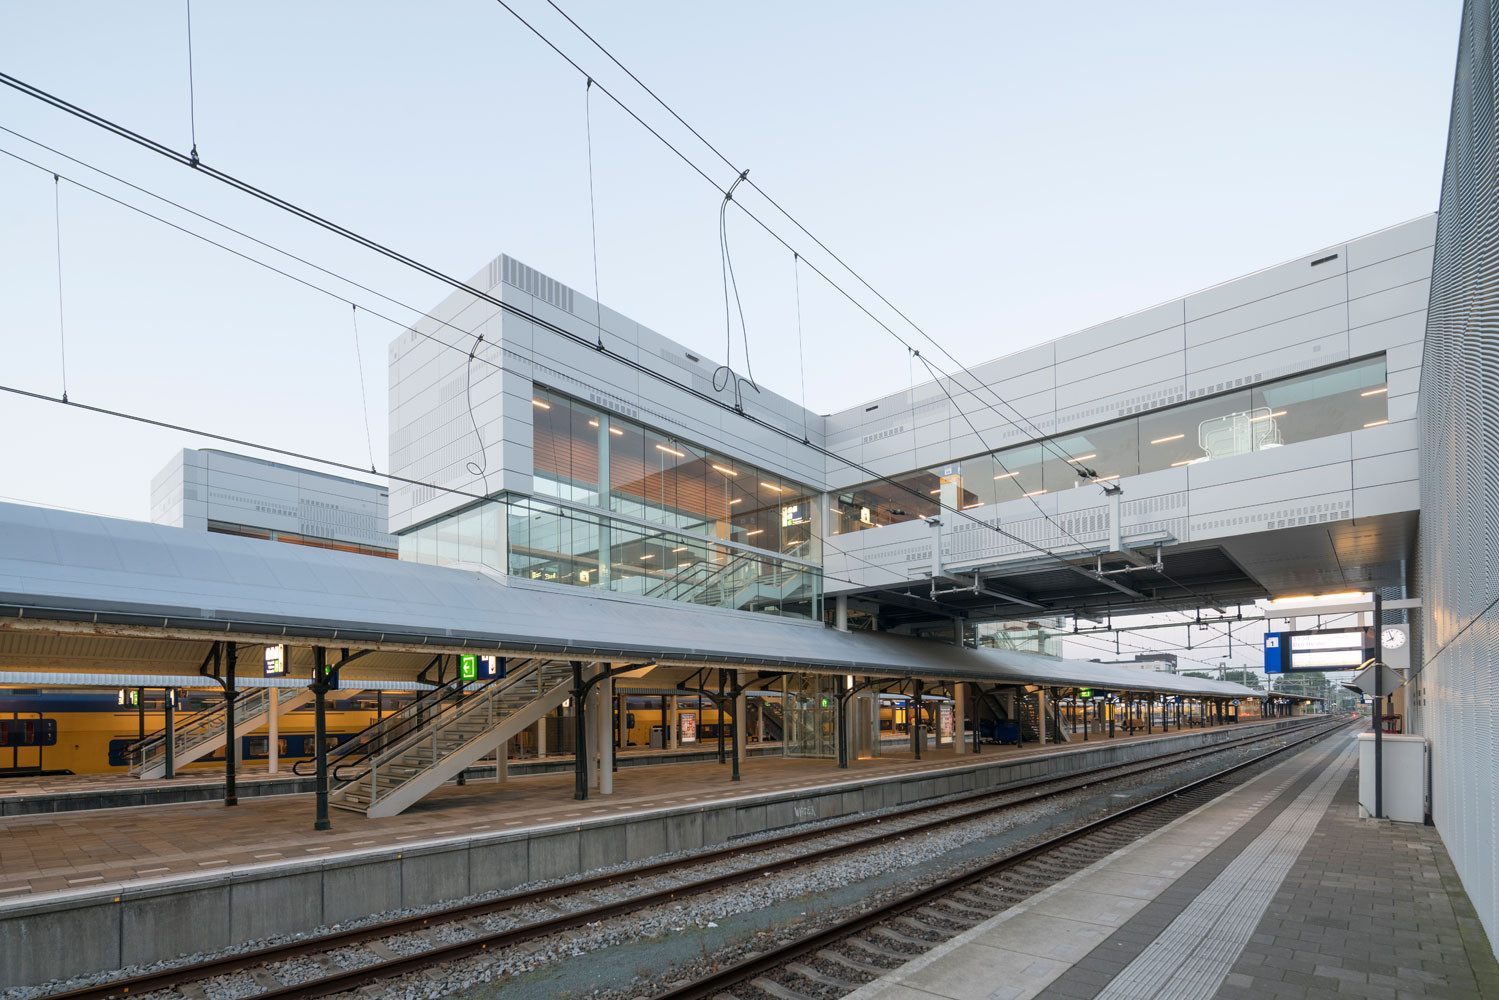 Station Alkmaar uitgerust met aluminium panelen strekmetaal